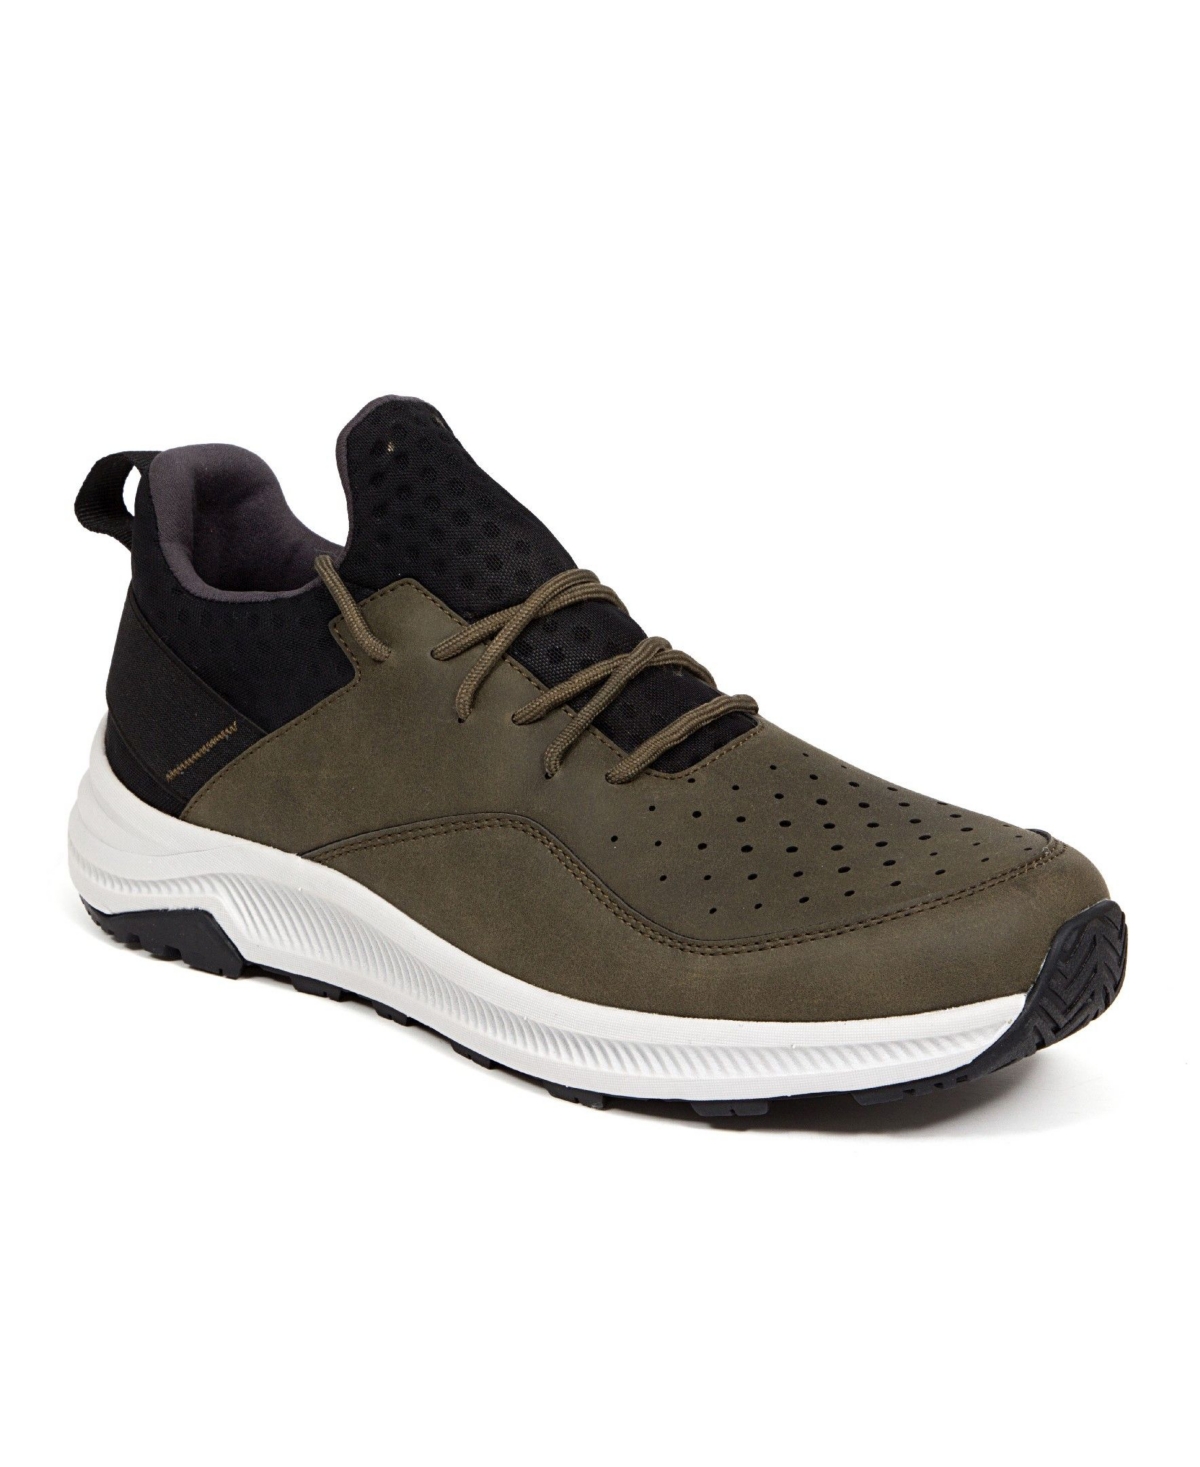 Shop Deer Stags Men's Contour Comfort Casual Hybrid Hiking Sneakers In Olive,black